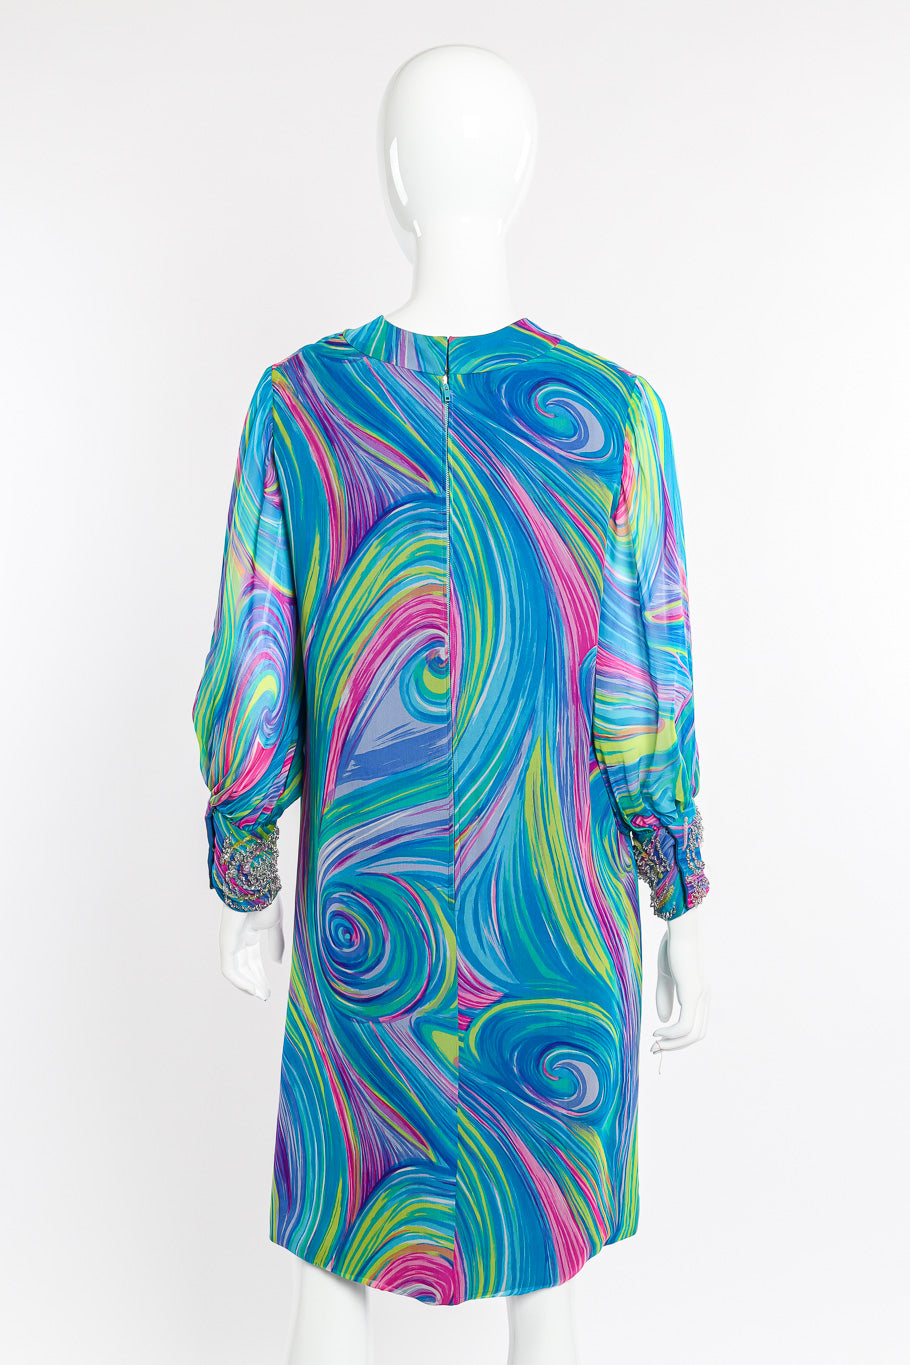 Vintage Mr. Frank Abstract Swirl Silk Dress back view on mannequin @Recessla